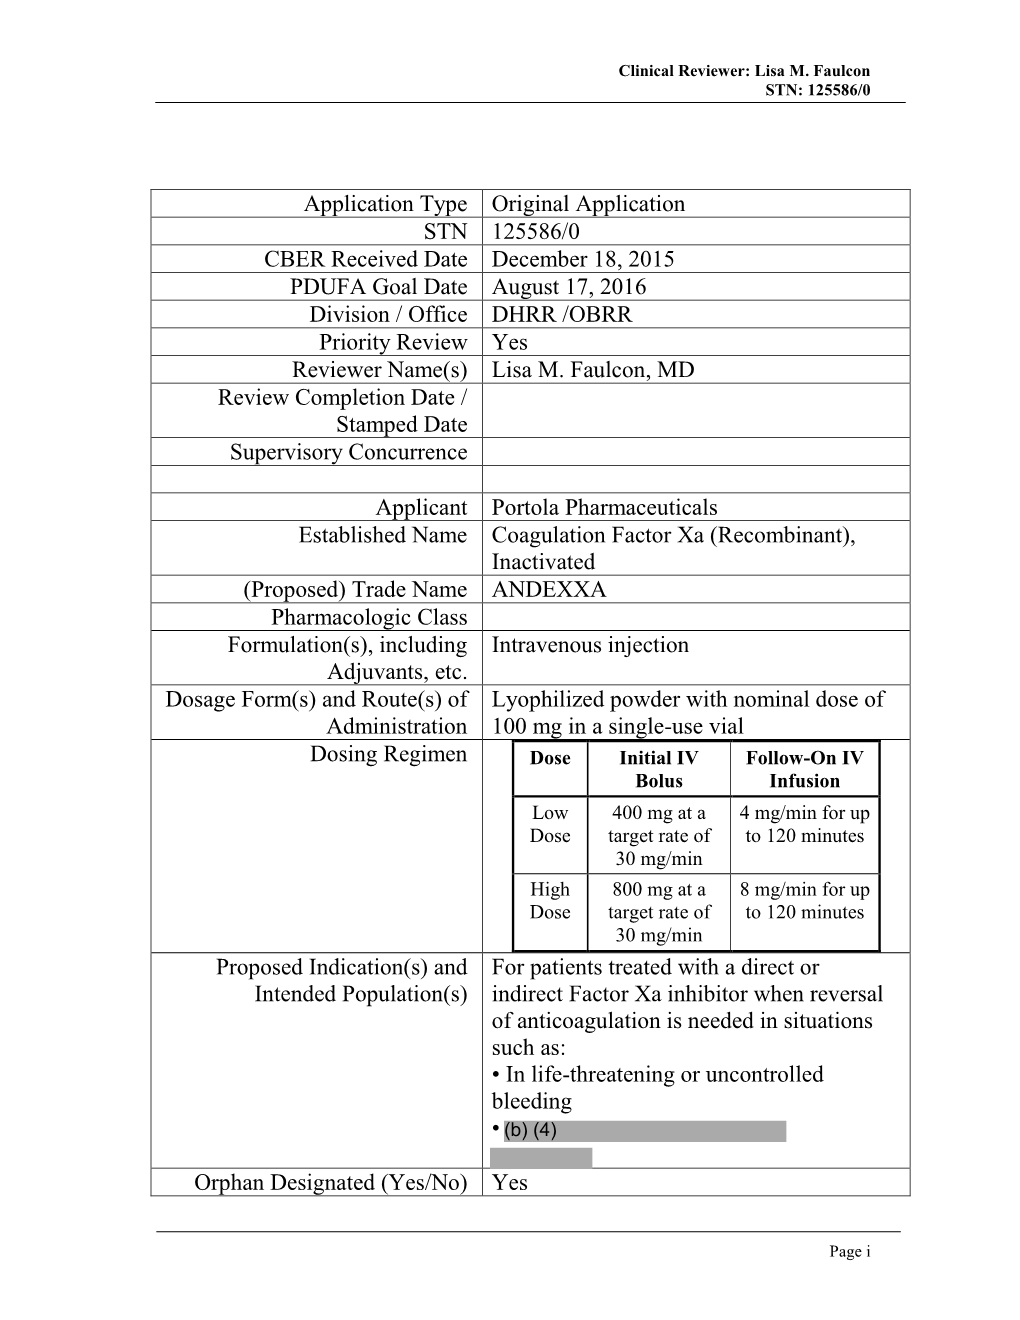 ANDEXXA Pharmacologic Class Formulation(S), Including Intravenous Injection Adjuvants, Etc